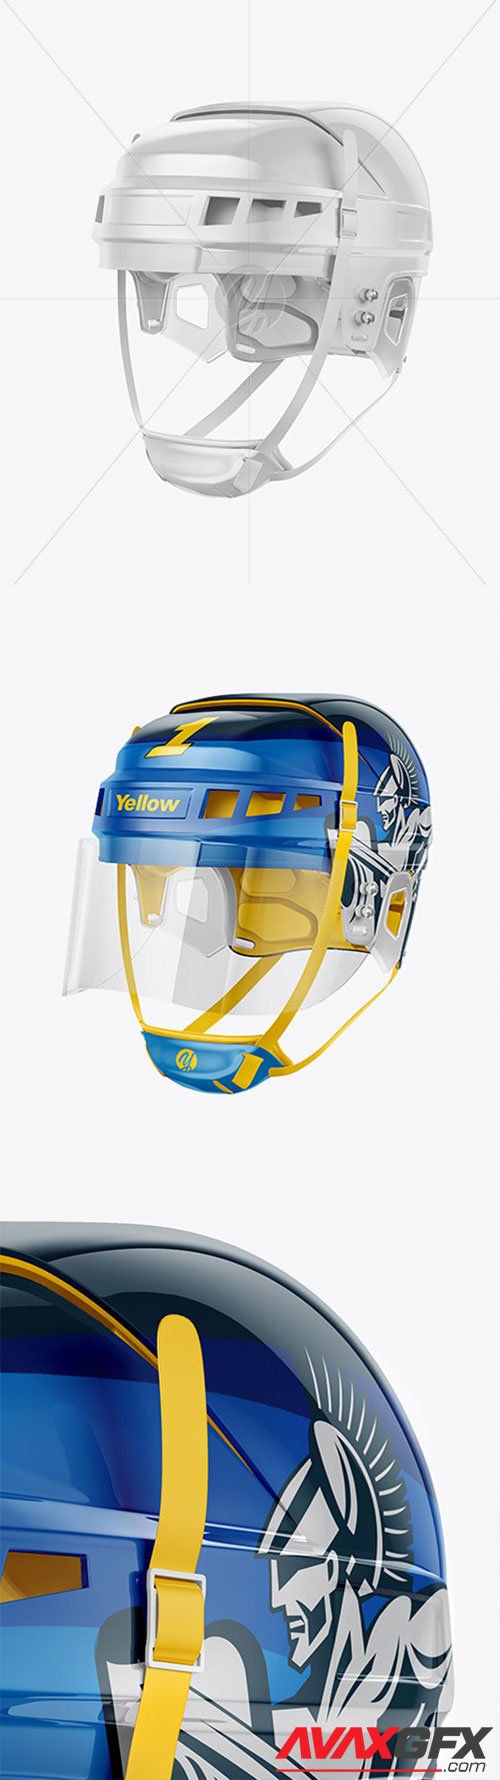 Download Hockey Helmet Mockup 62112 » AVAXGFX - All Downloads that ...